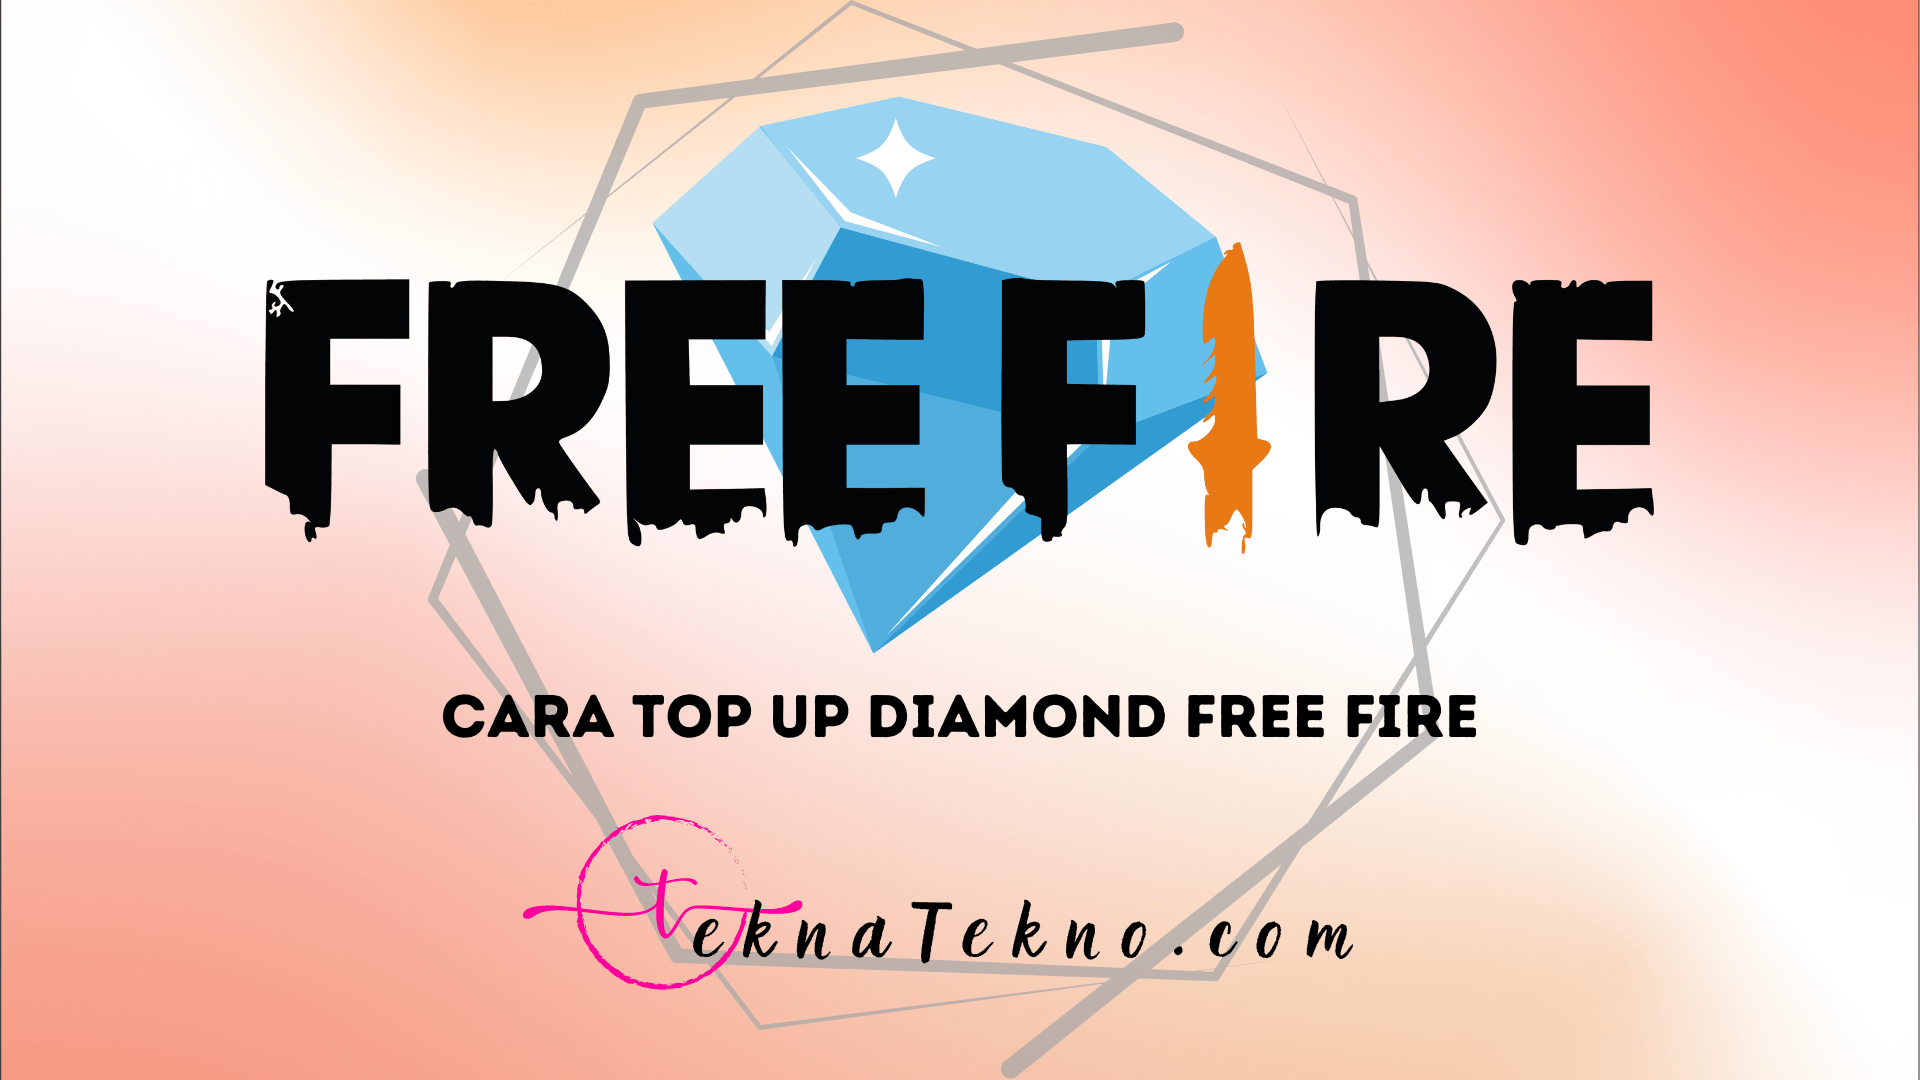 7 Cara Top Up Diamond Free Fire (FF) dengan Mudah dan Cepat